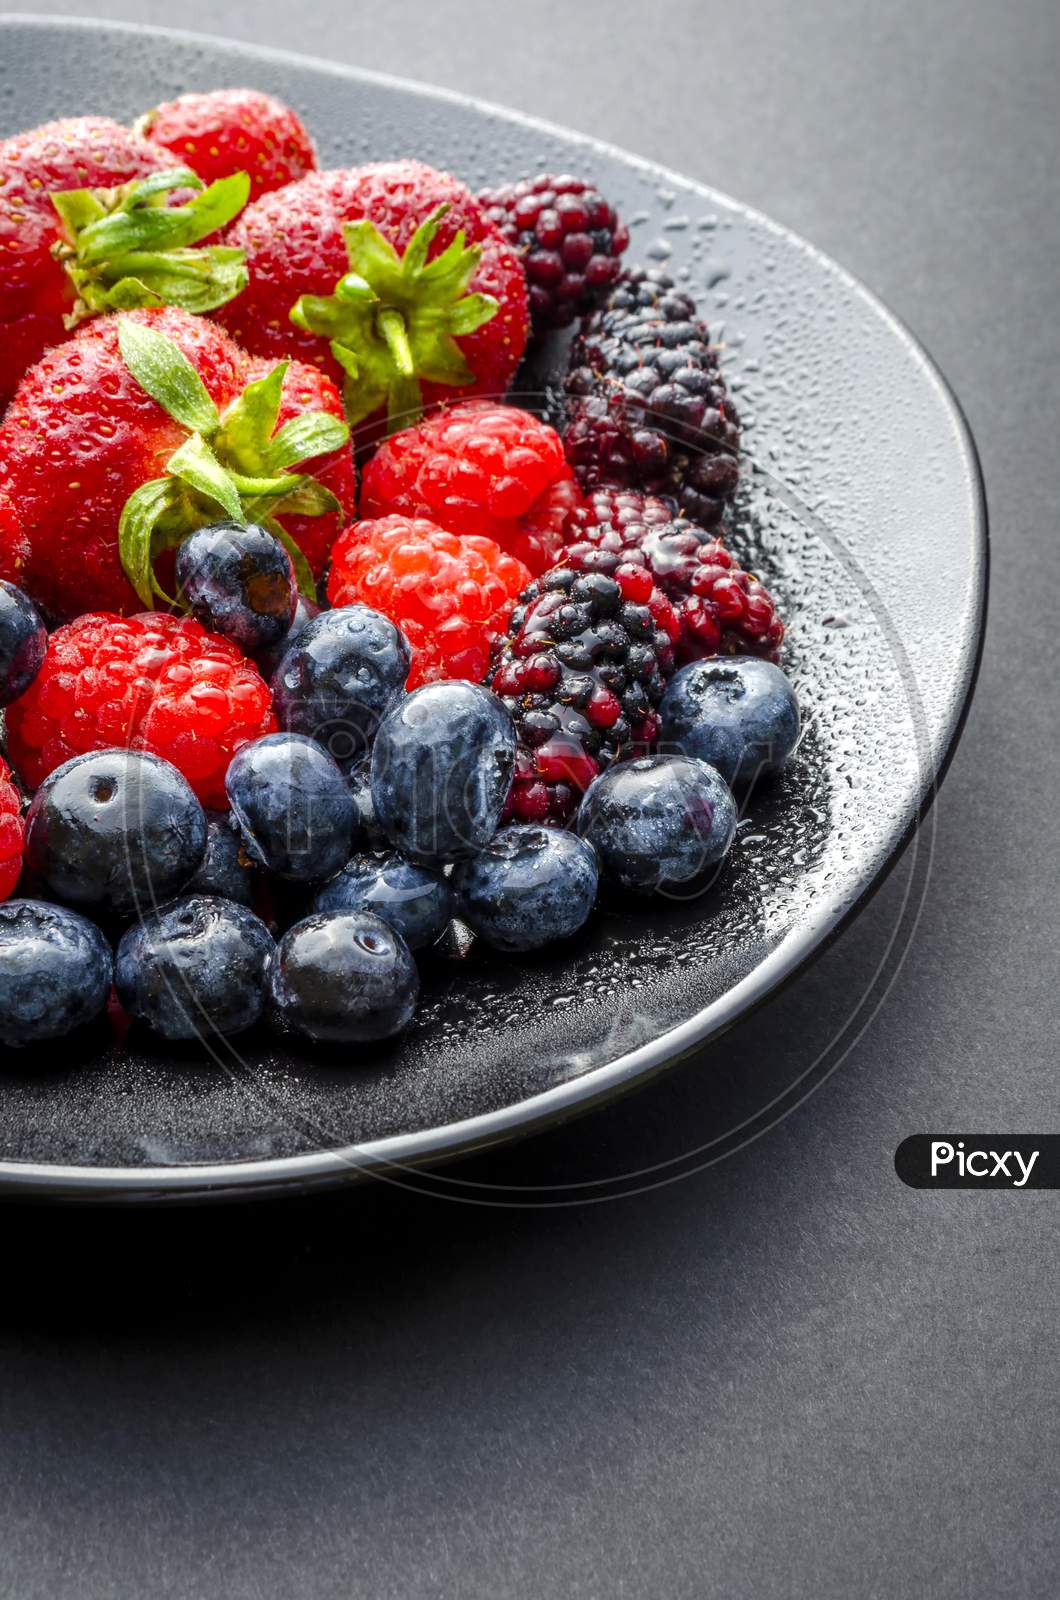 A vertical shot of a plate of fresh summer fruit on a dark background.